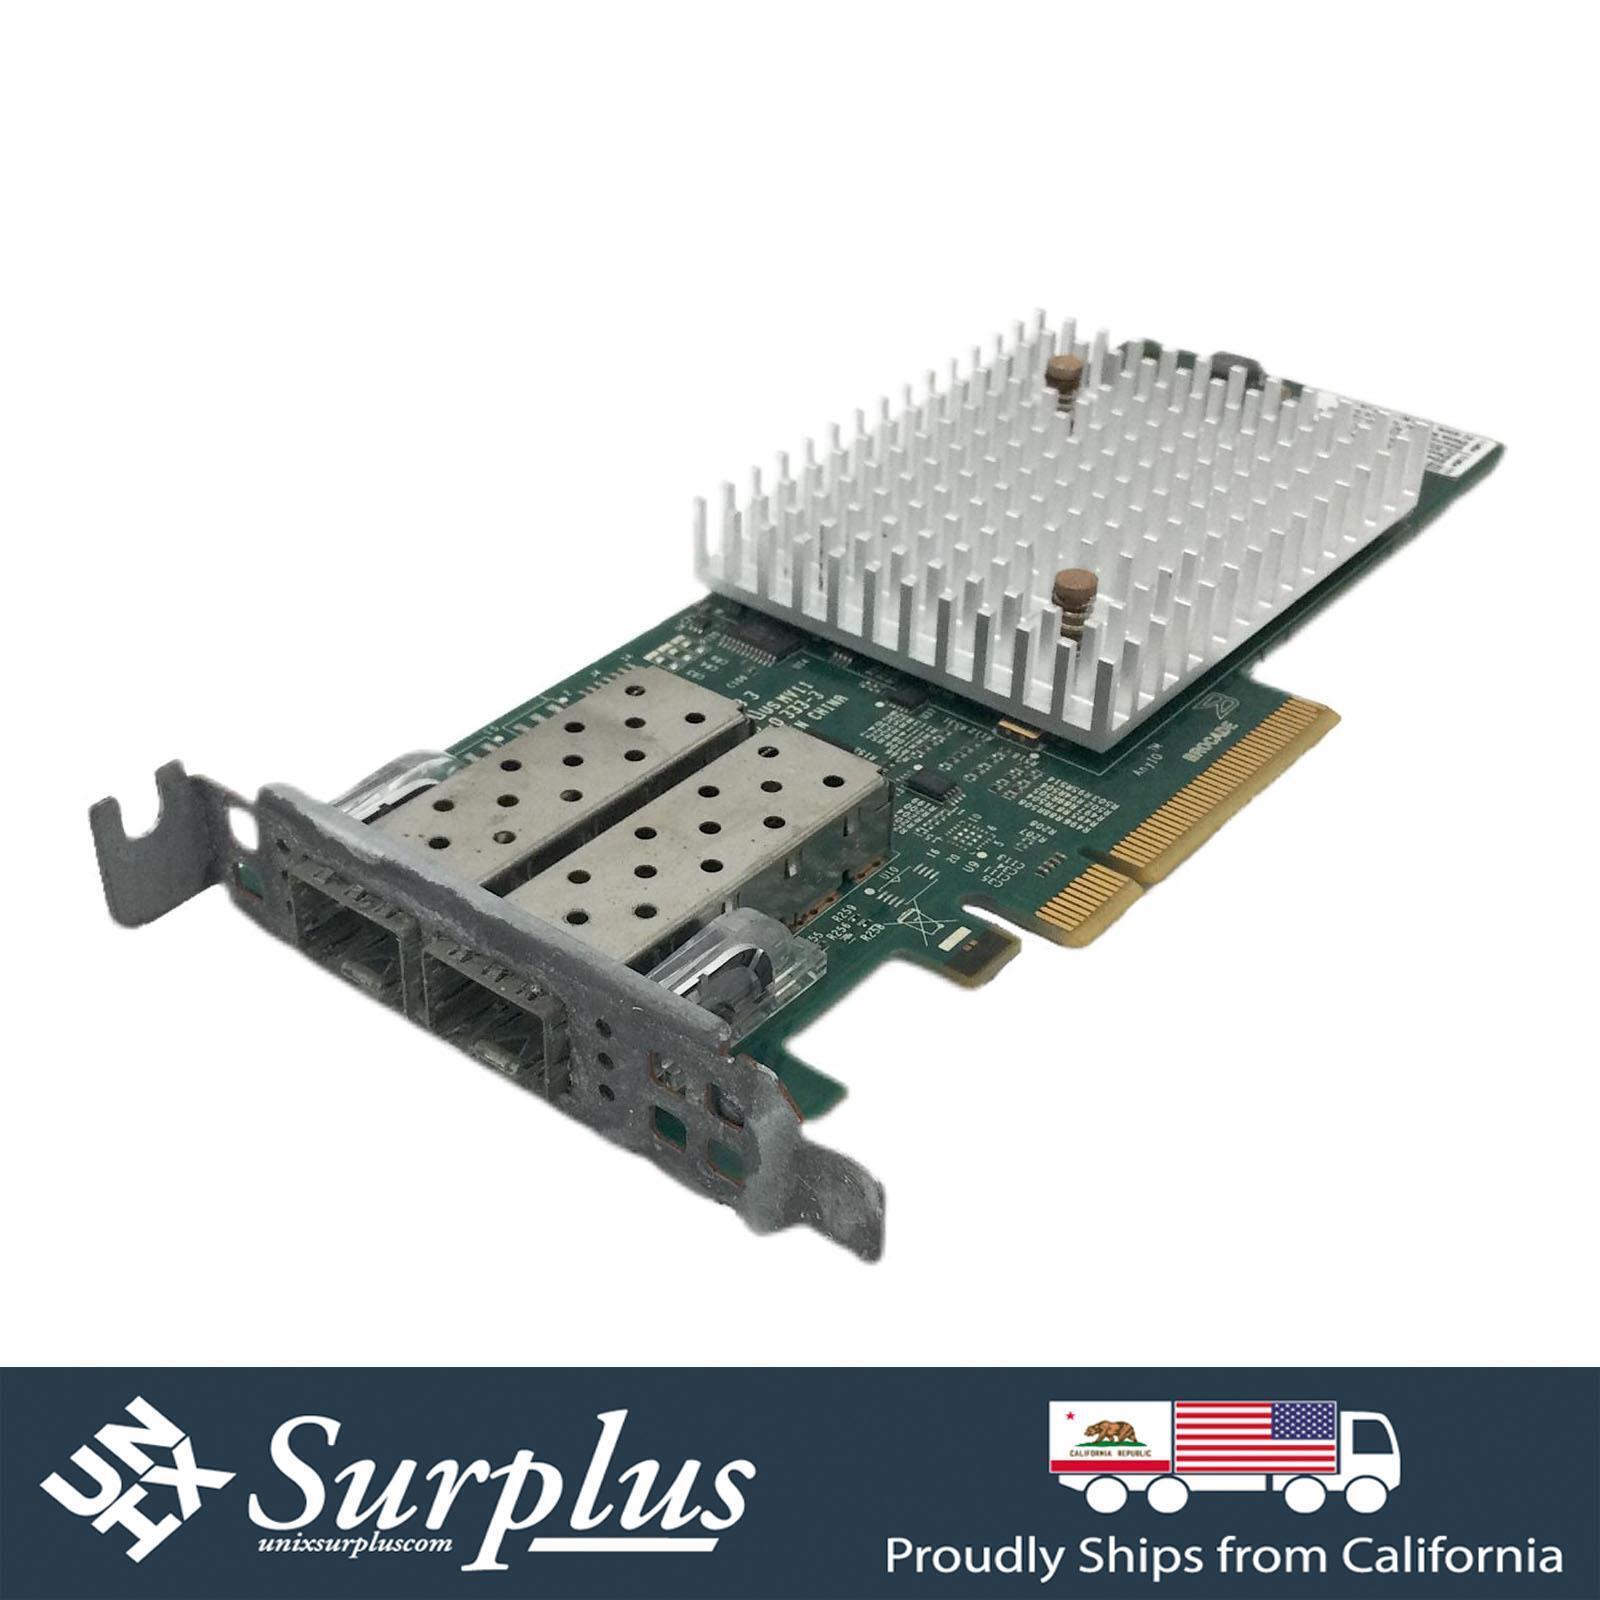 Brocade BR-1860 Dual Port FC 16GB NIC PCIe x8 HBA Network Adapter Low Profile